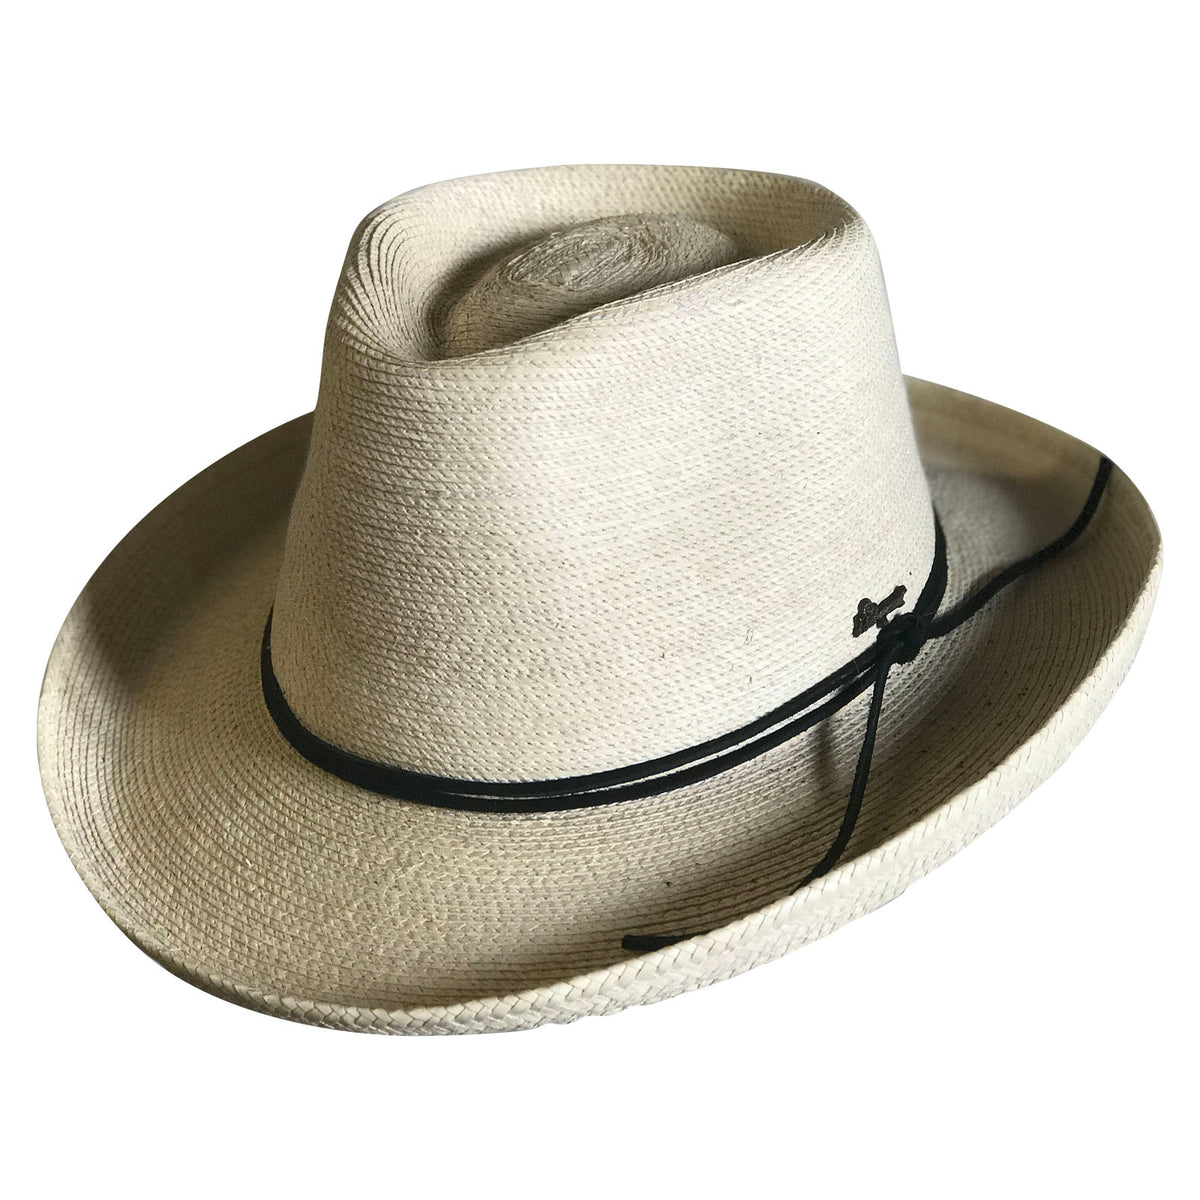 New Mens Cowboy Hat Western Style Tweed Linen Wide Brim Sun Visor